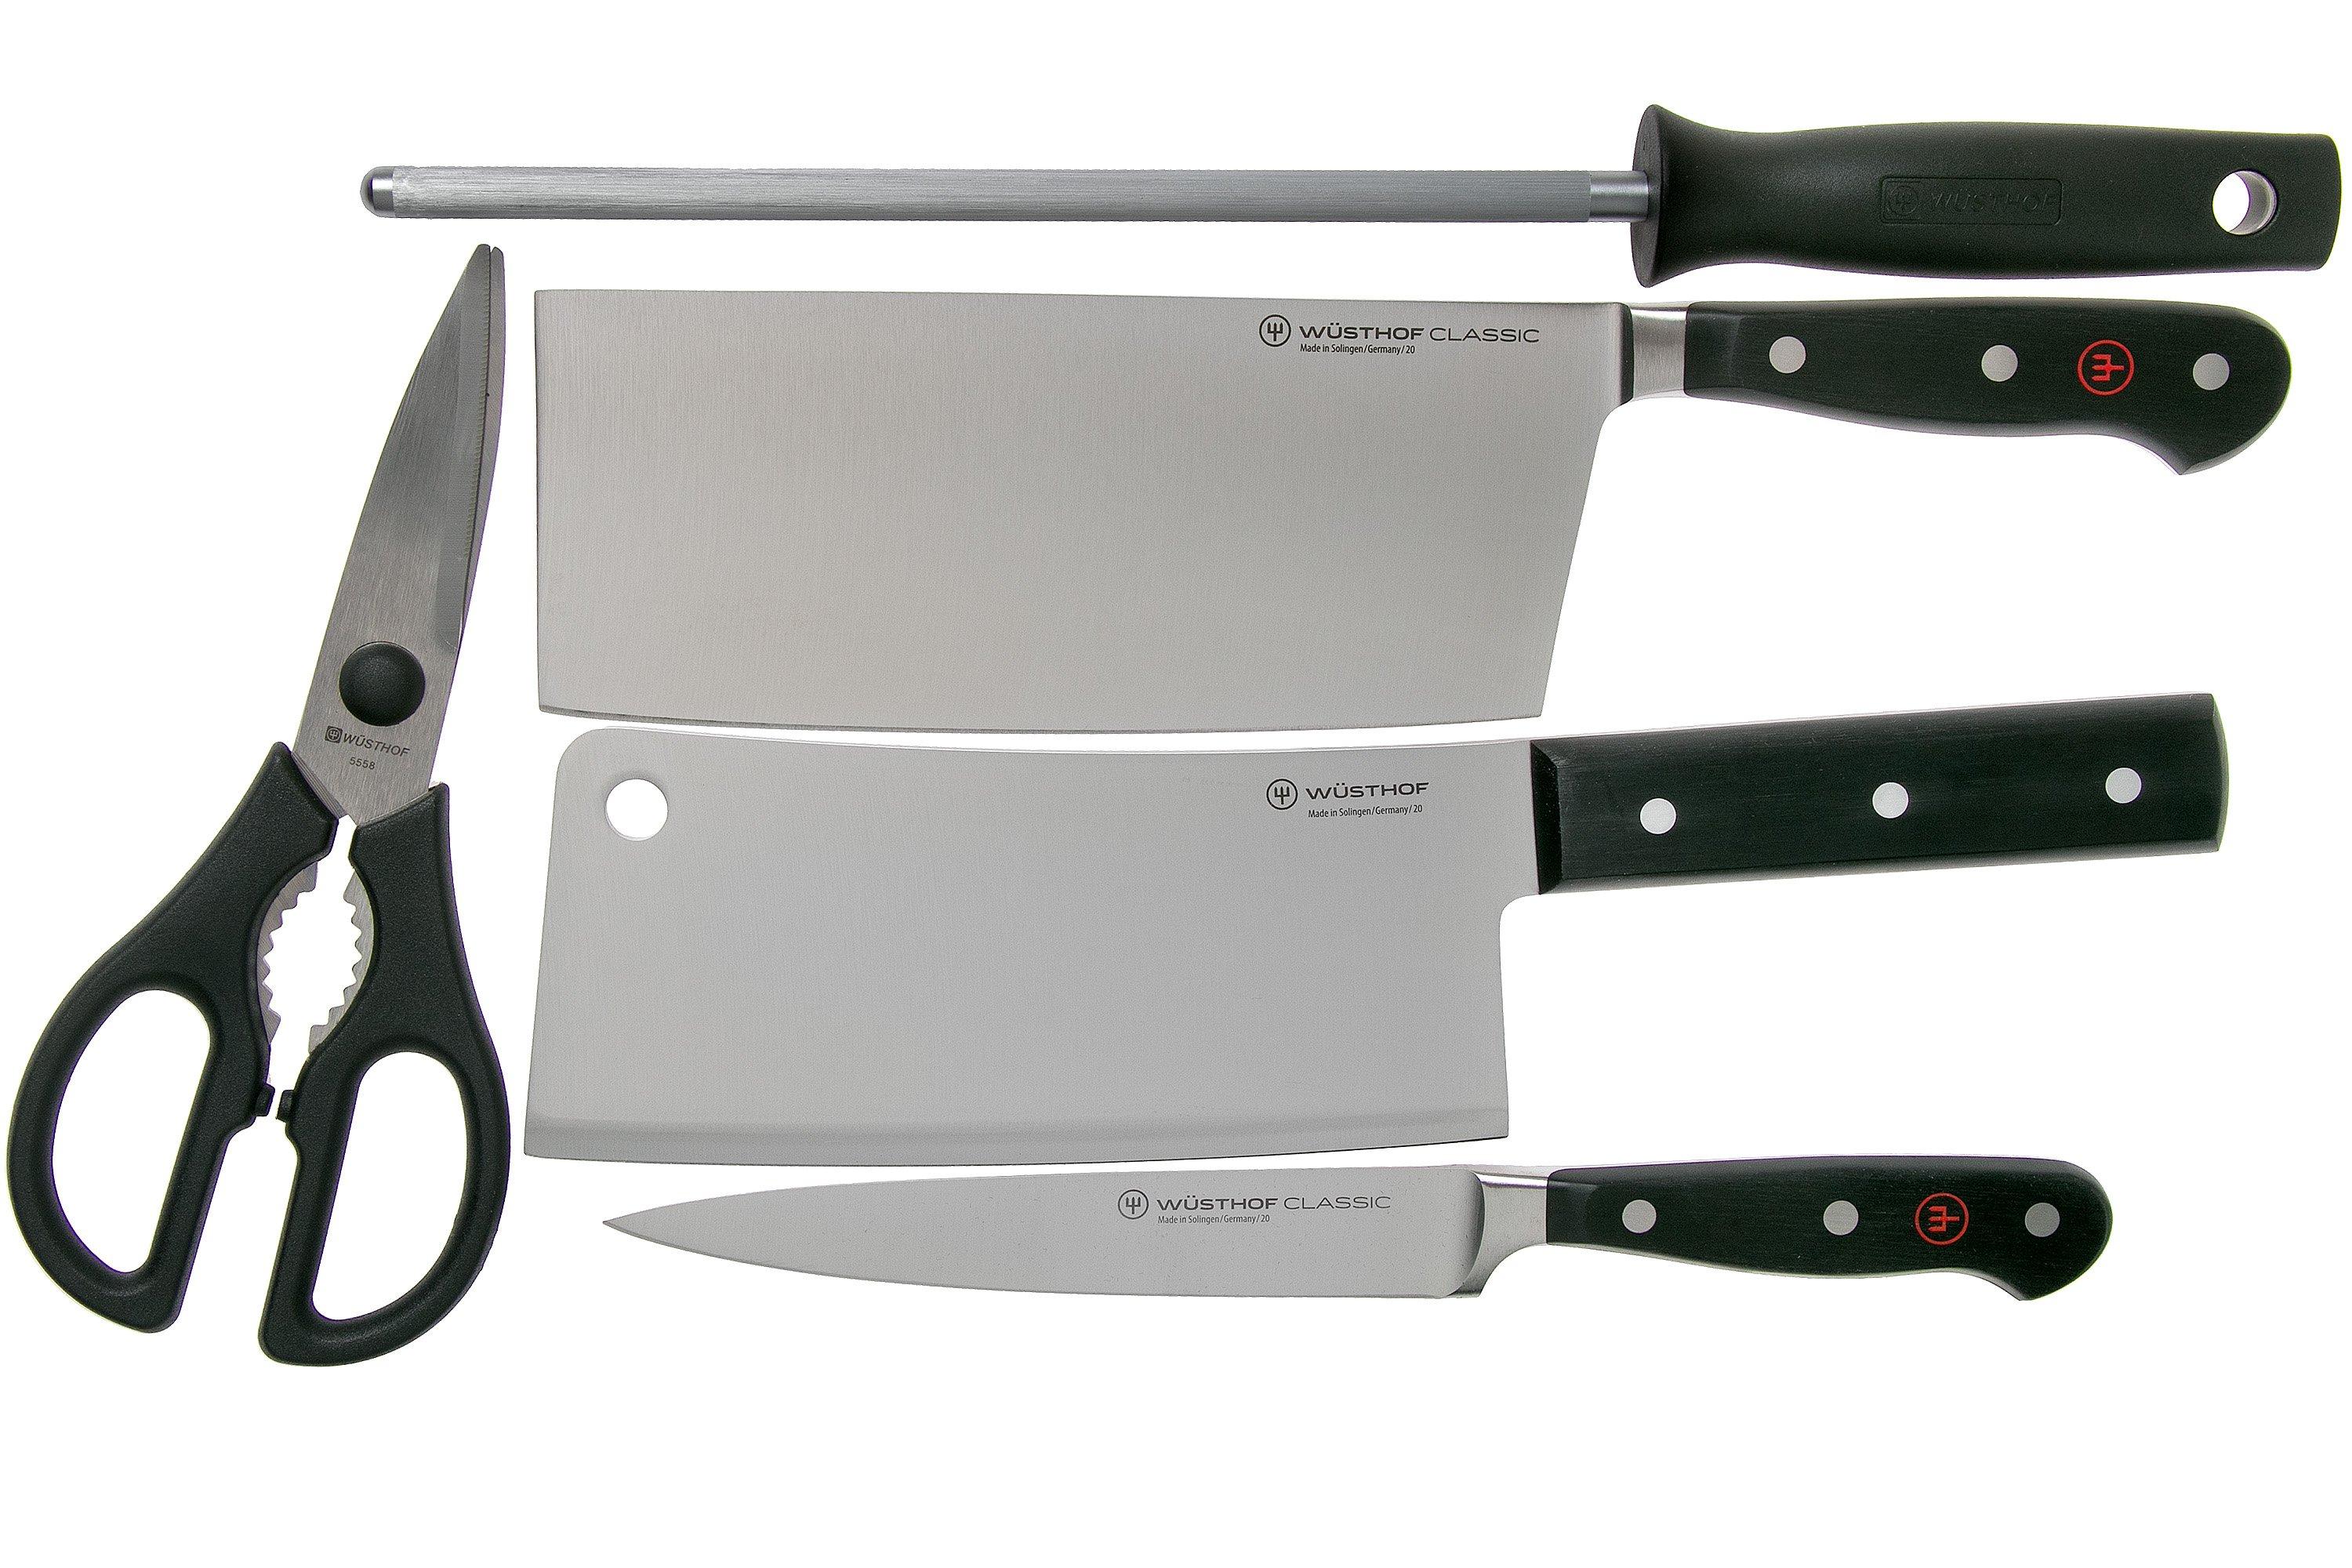 Wüsthof Classic 5-piece knife set, 1090170503  Advantageously shopping at